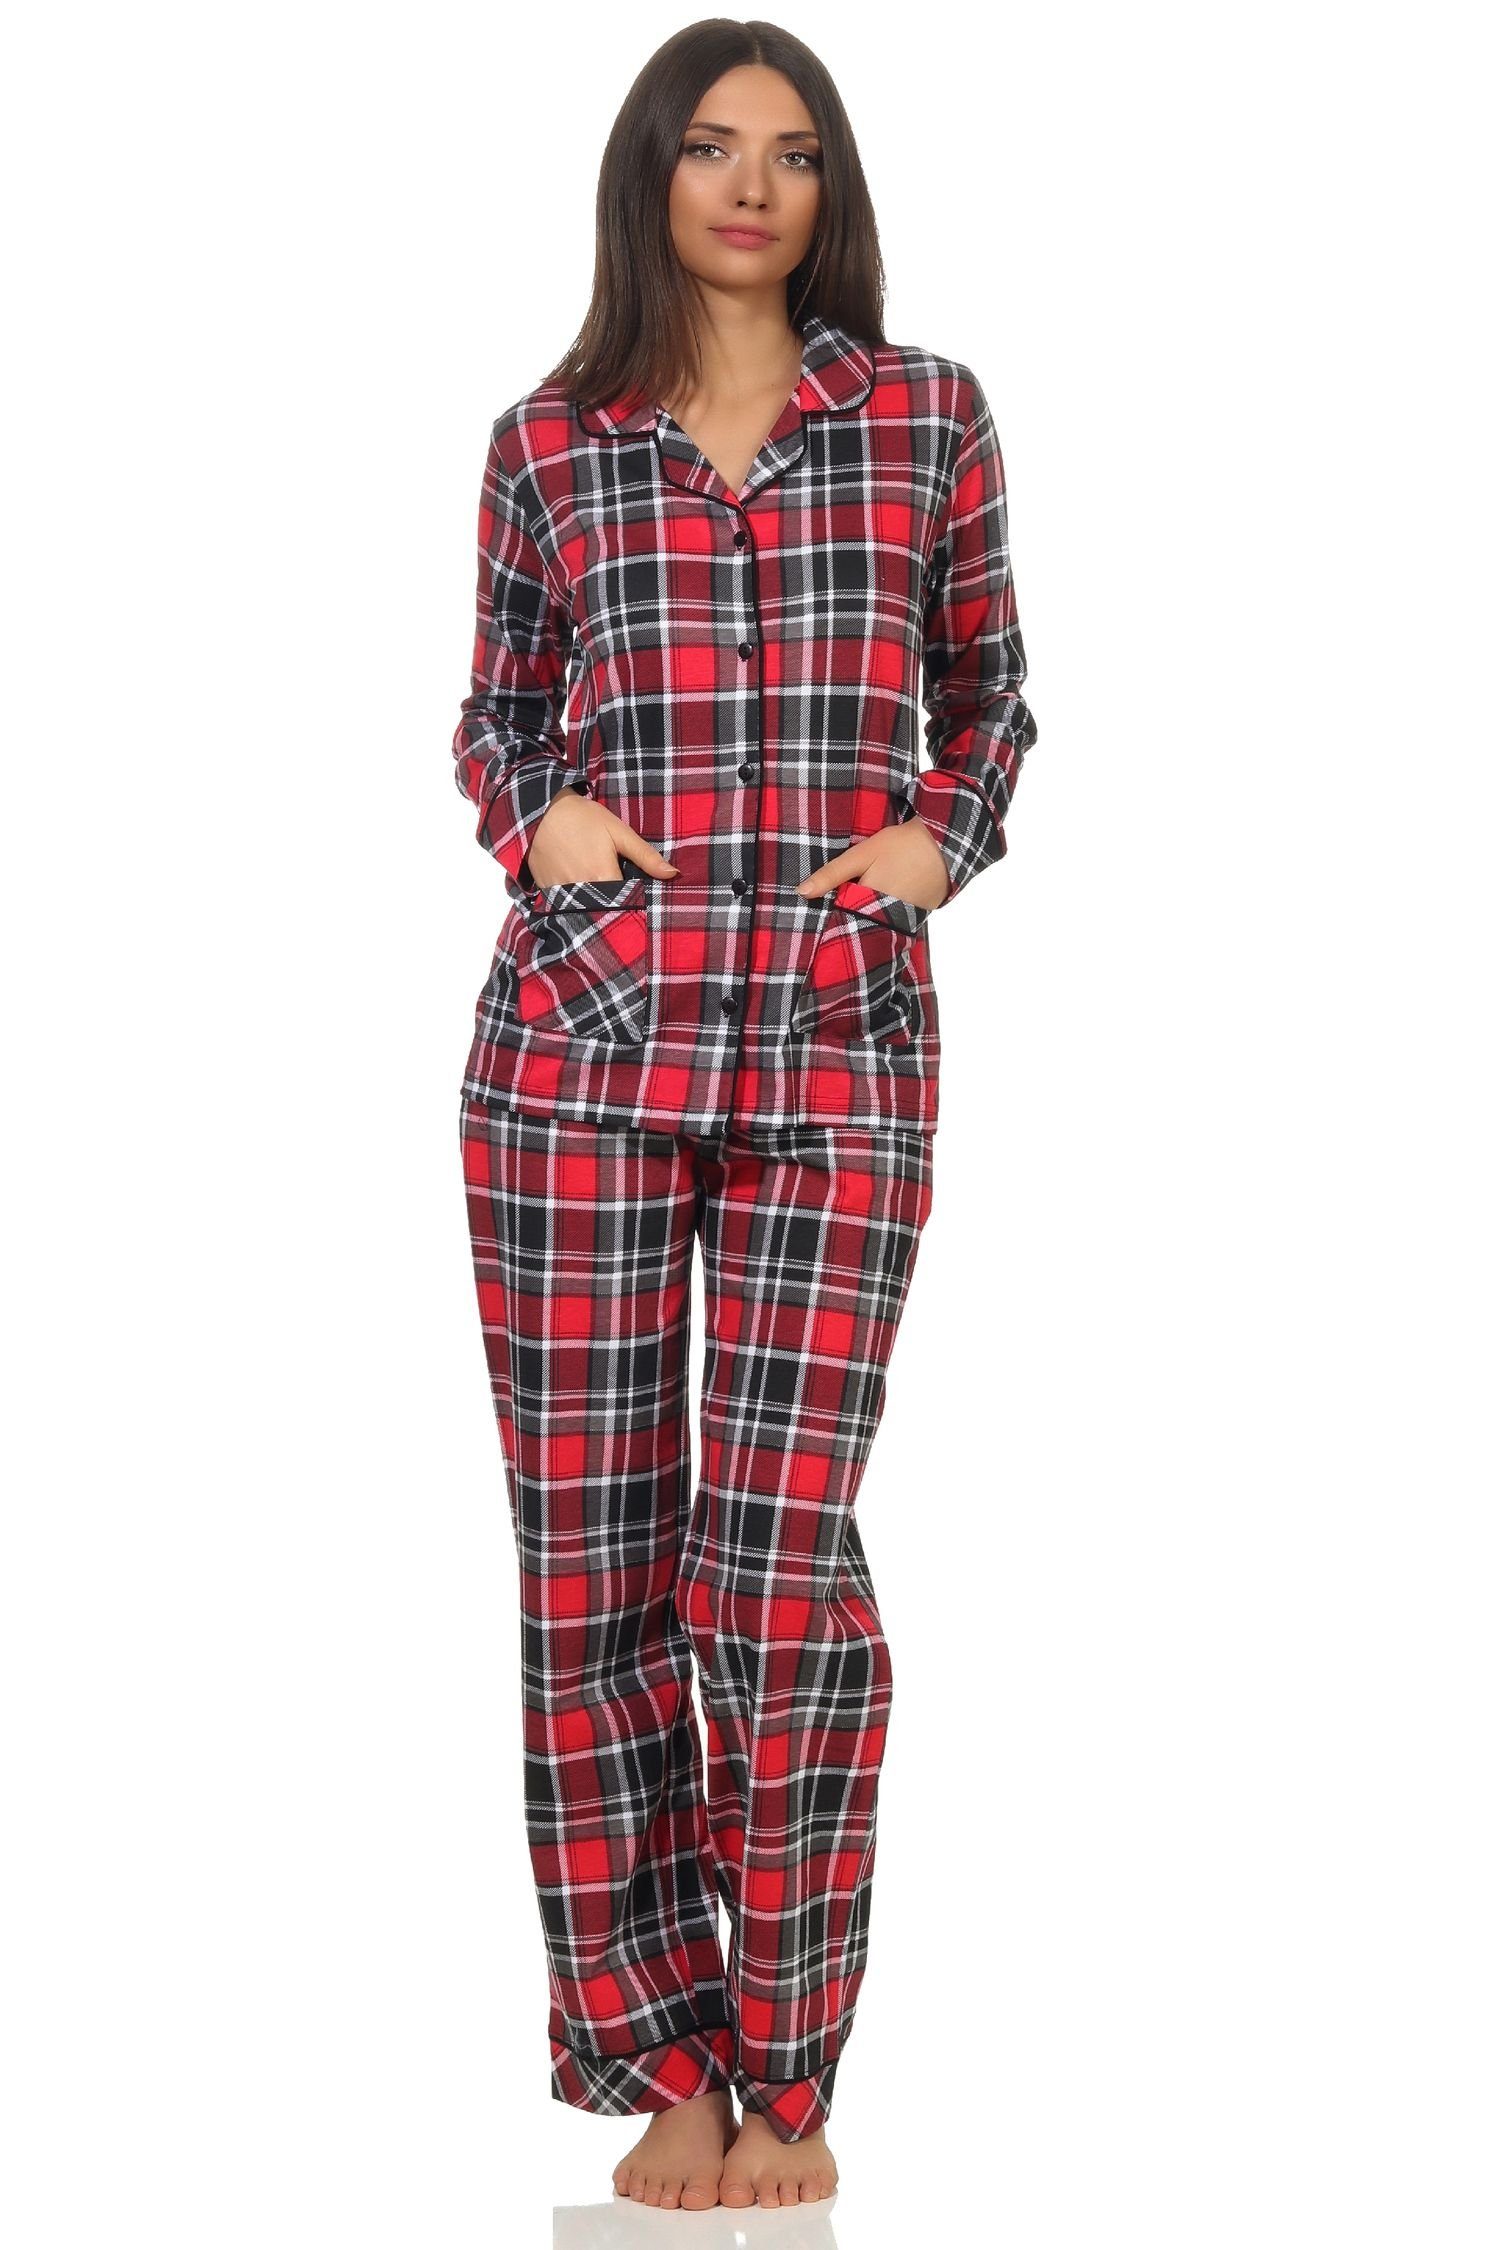 Normann Pyjama Damen Pyjama in Karo Optik zum durchknöpfen in Single Jersey  Qualität | Pyjama-Sets